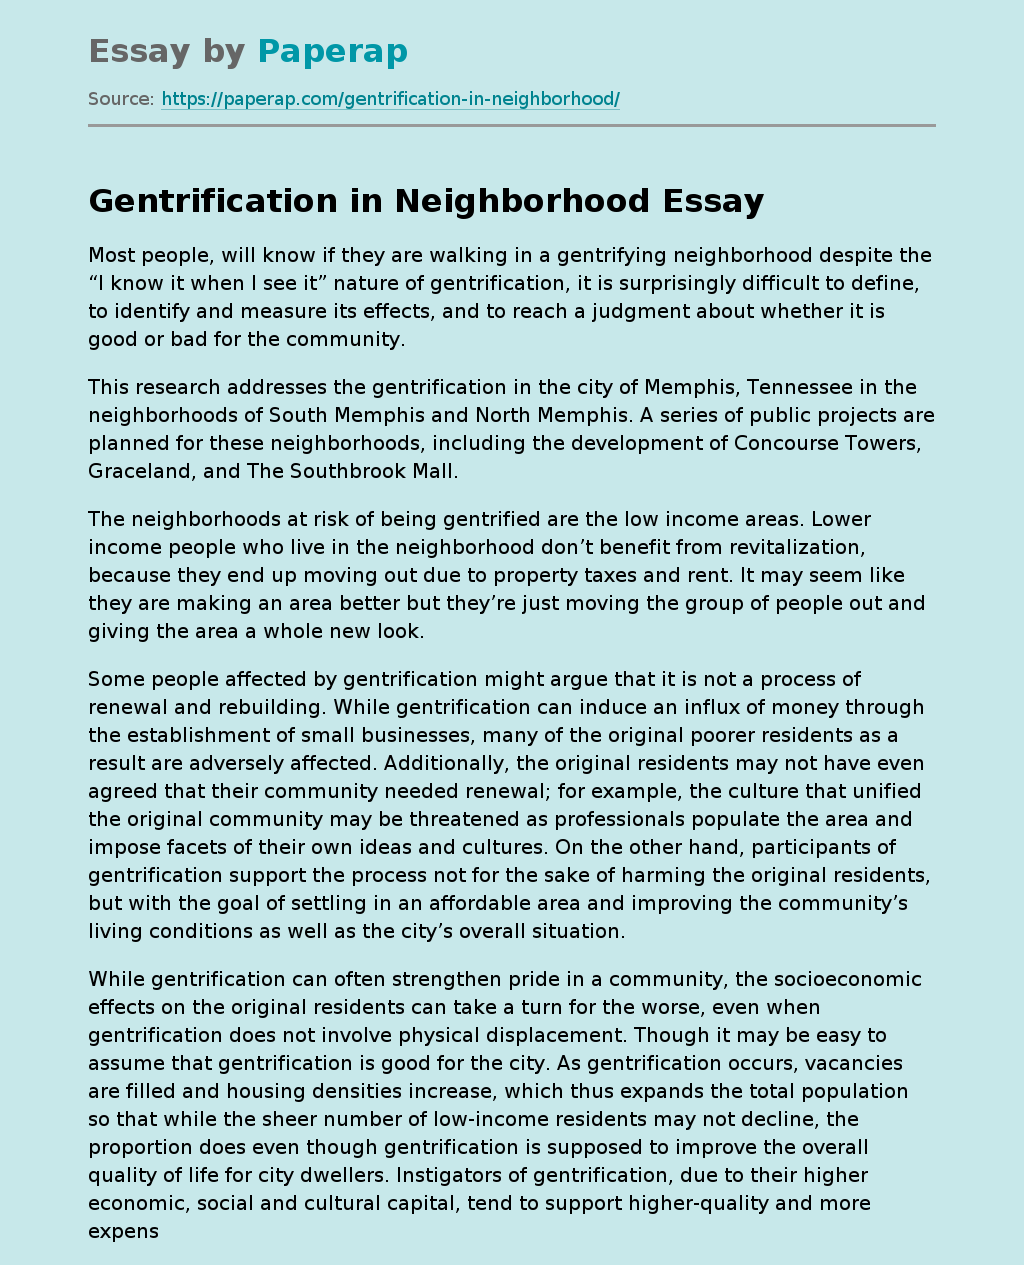 Gentrification in Neighborhood